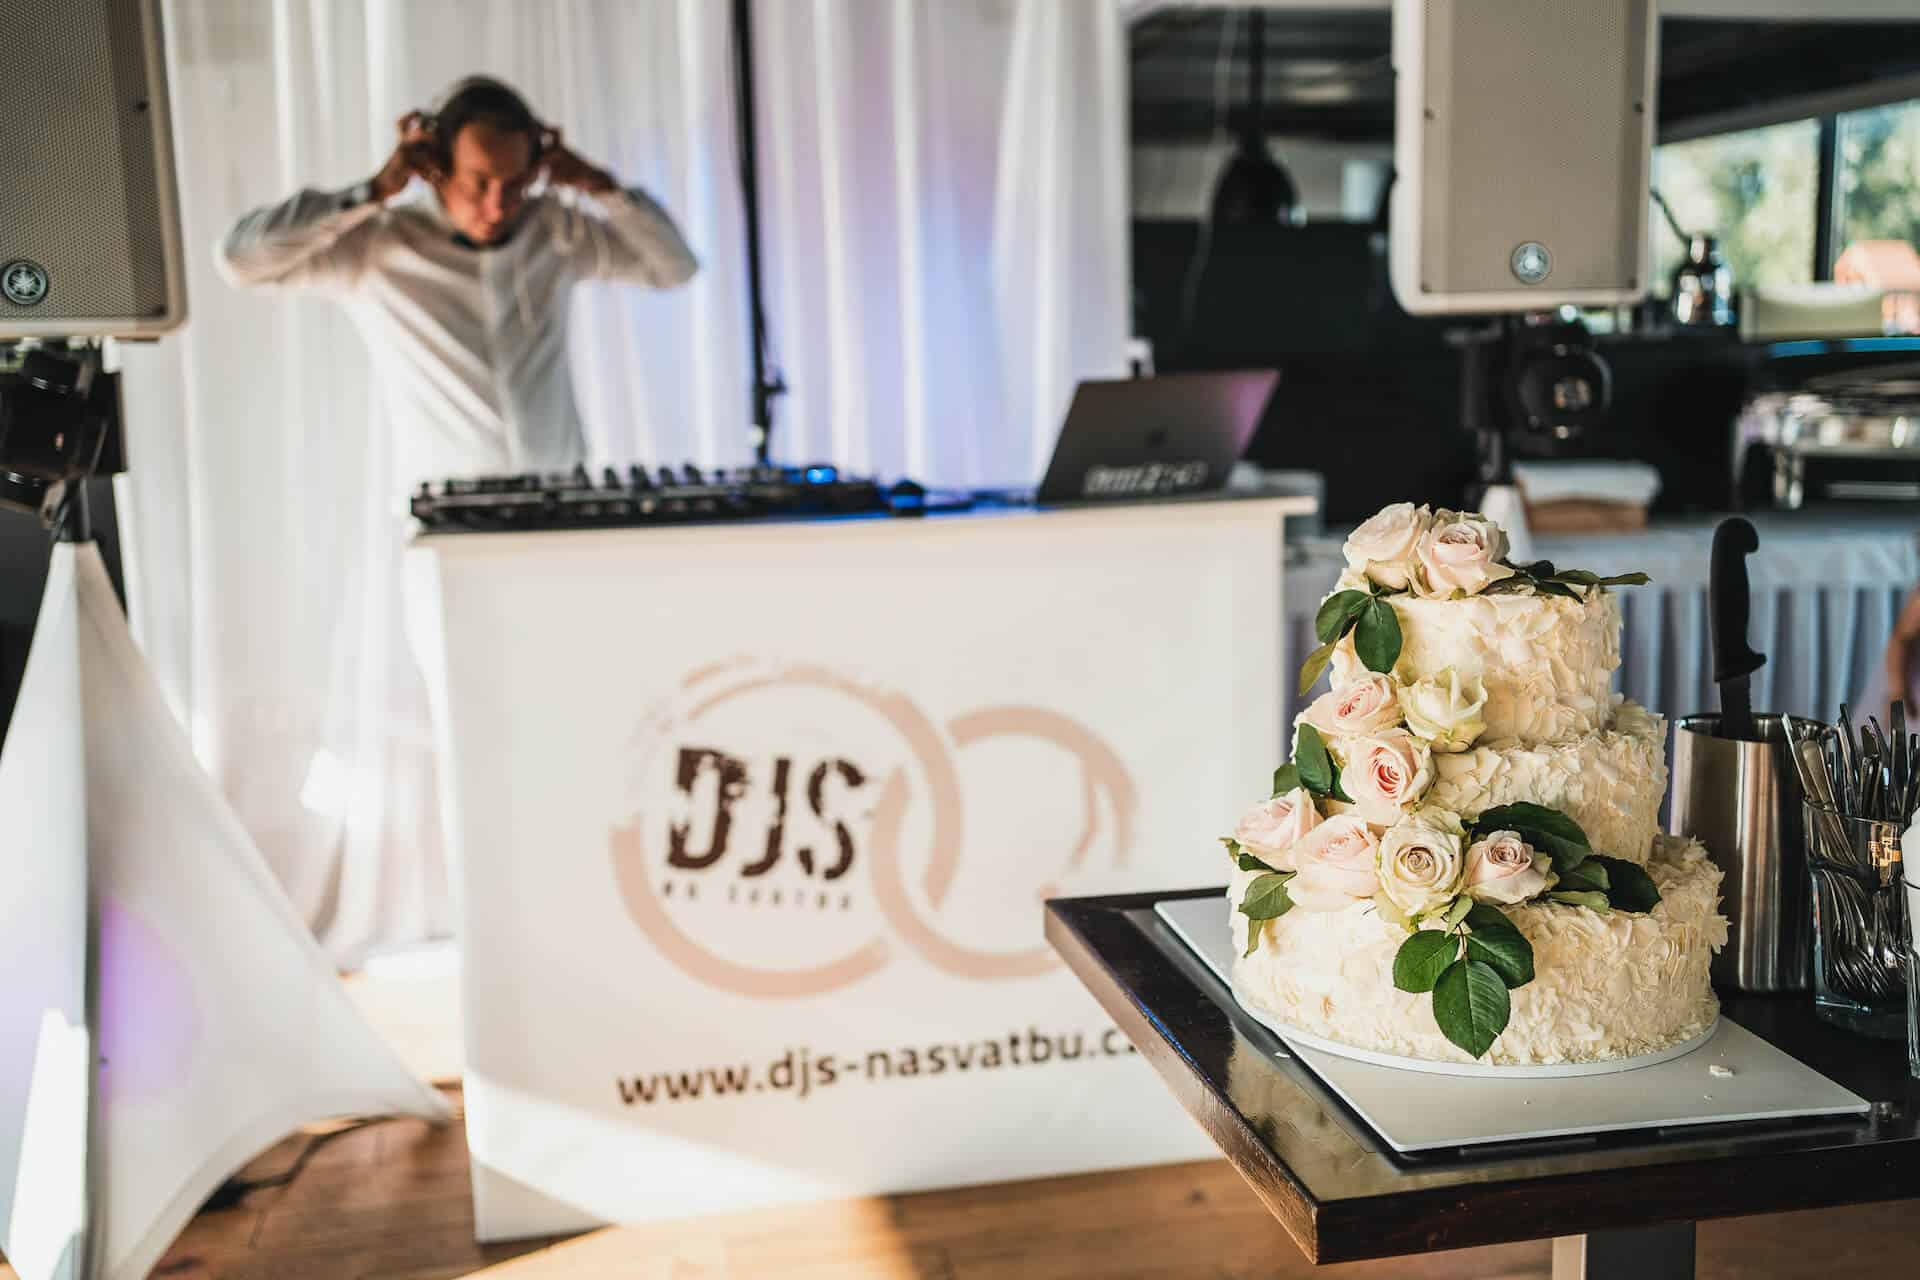 DJ na svatbu, pult s dortem